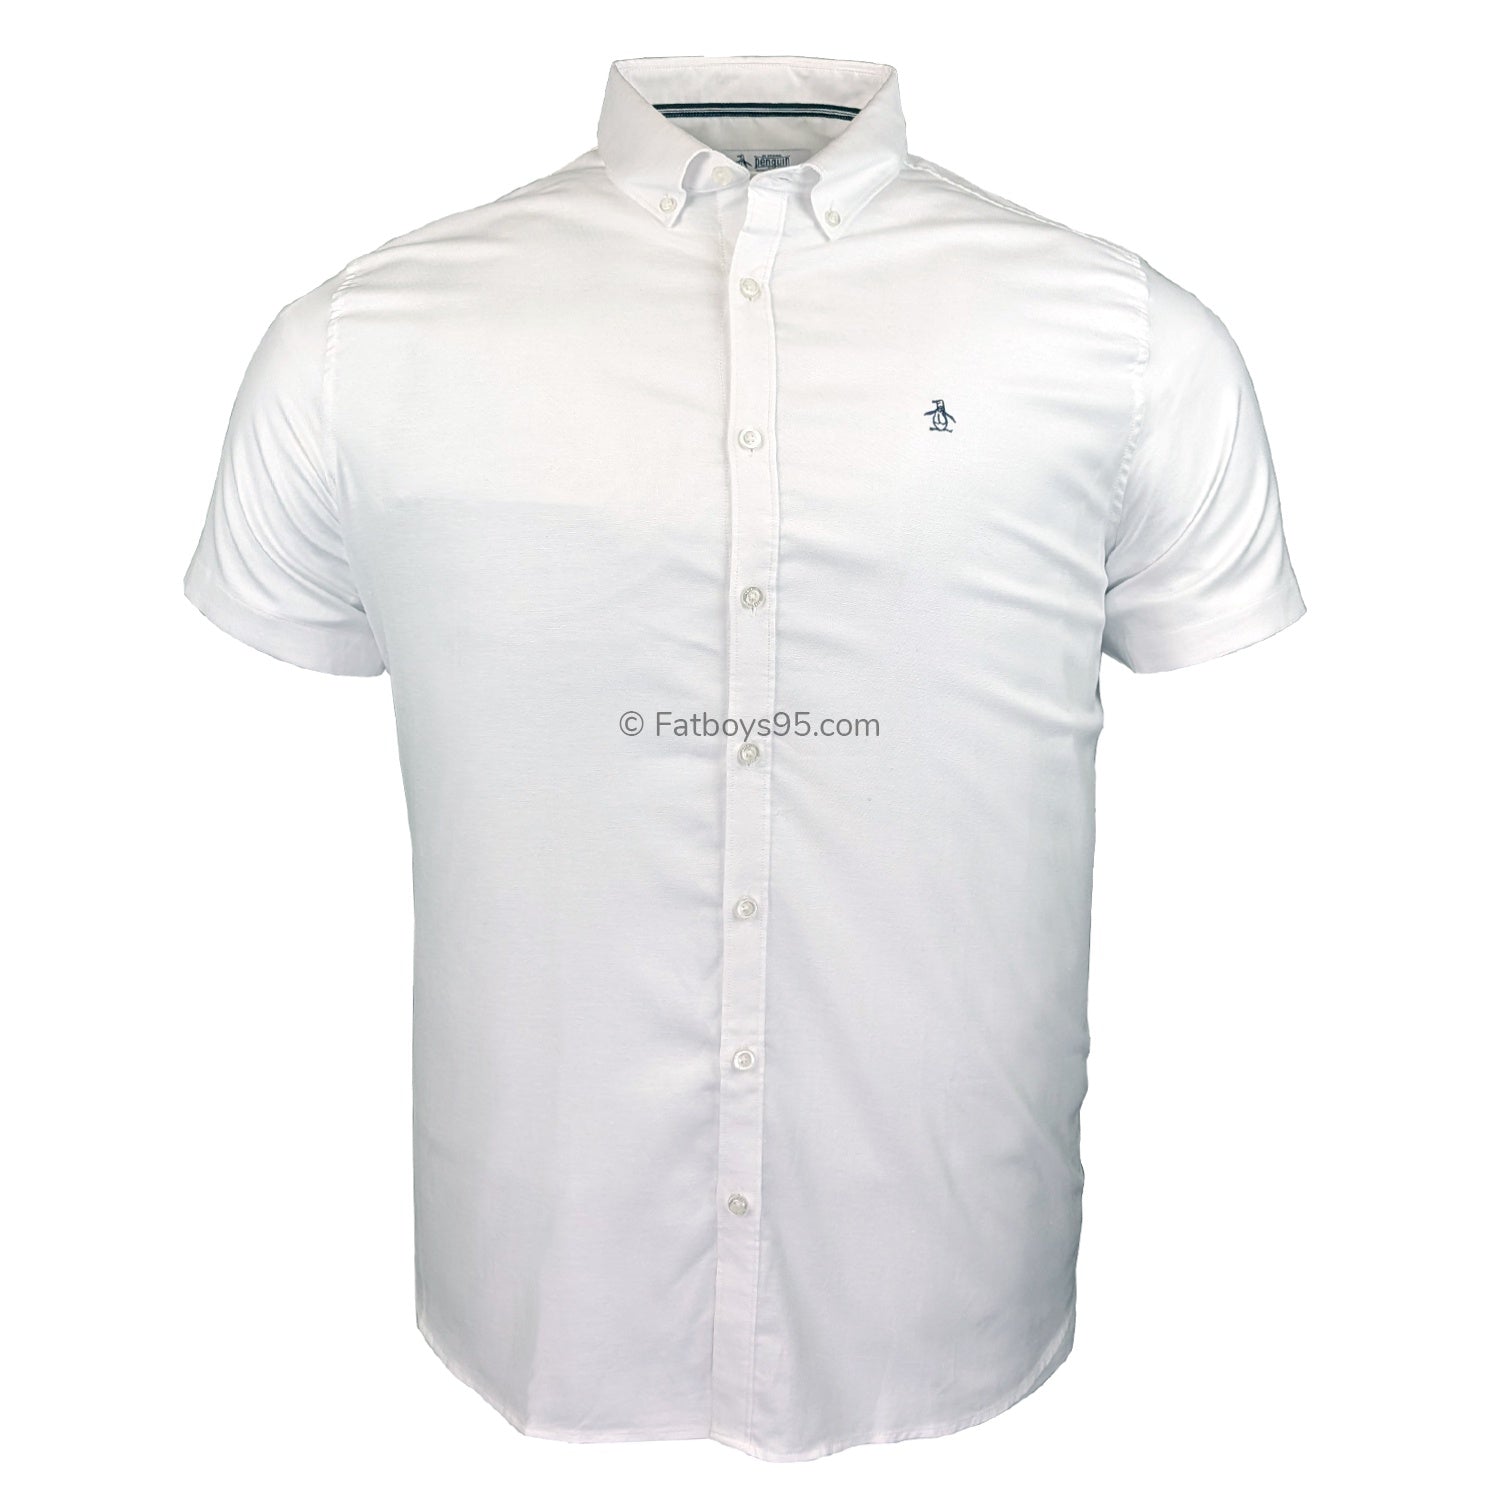 Penguin Oxford S/S Shirt - OJWB0037 - Bright White 1